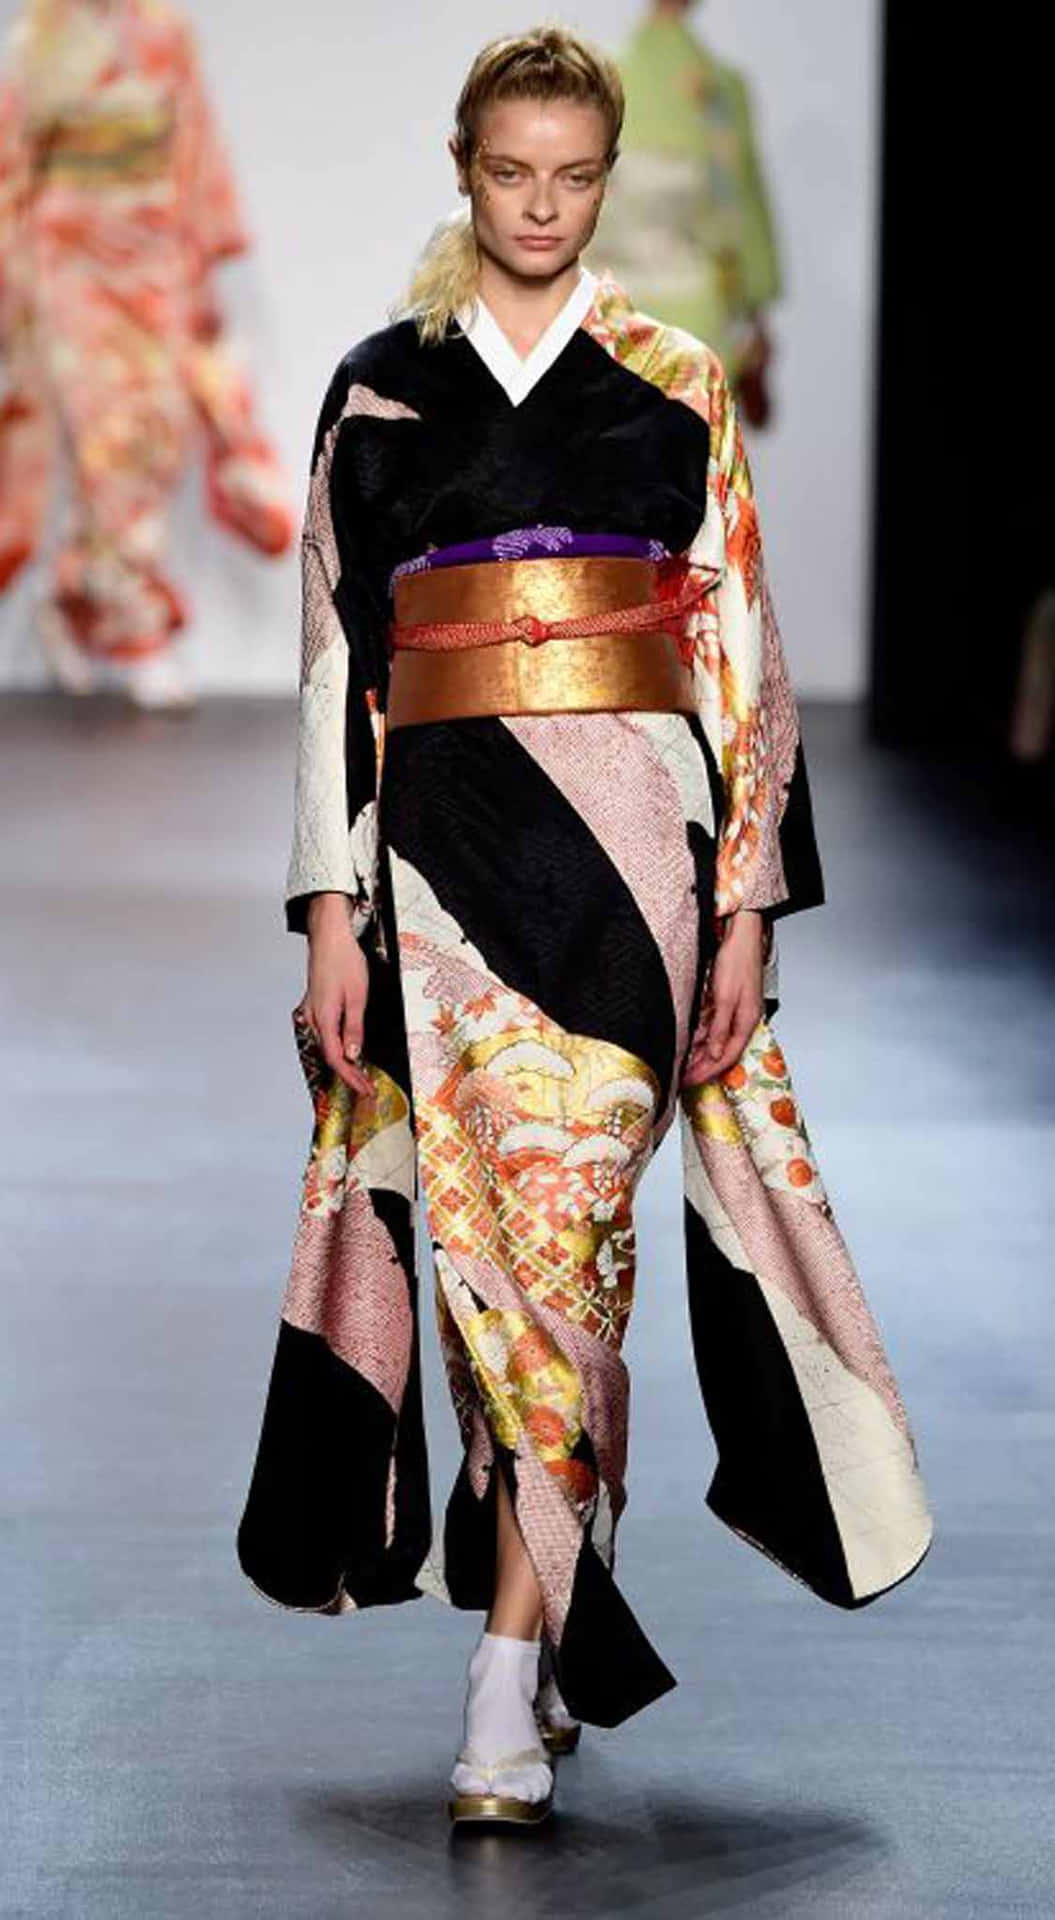 A beautiful kimono for a special occasion